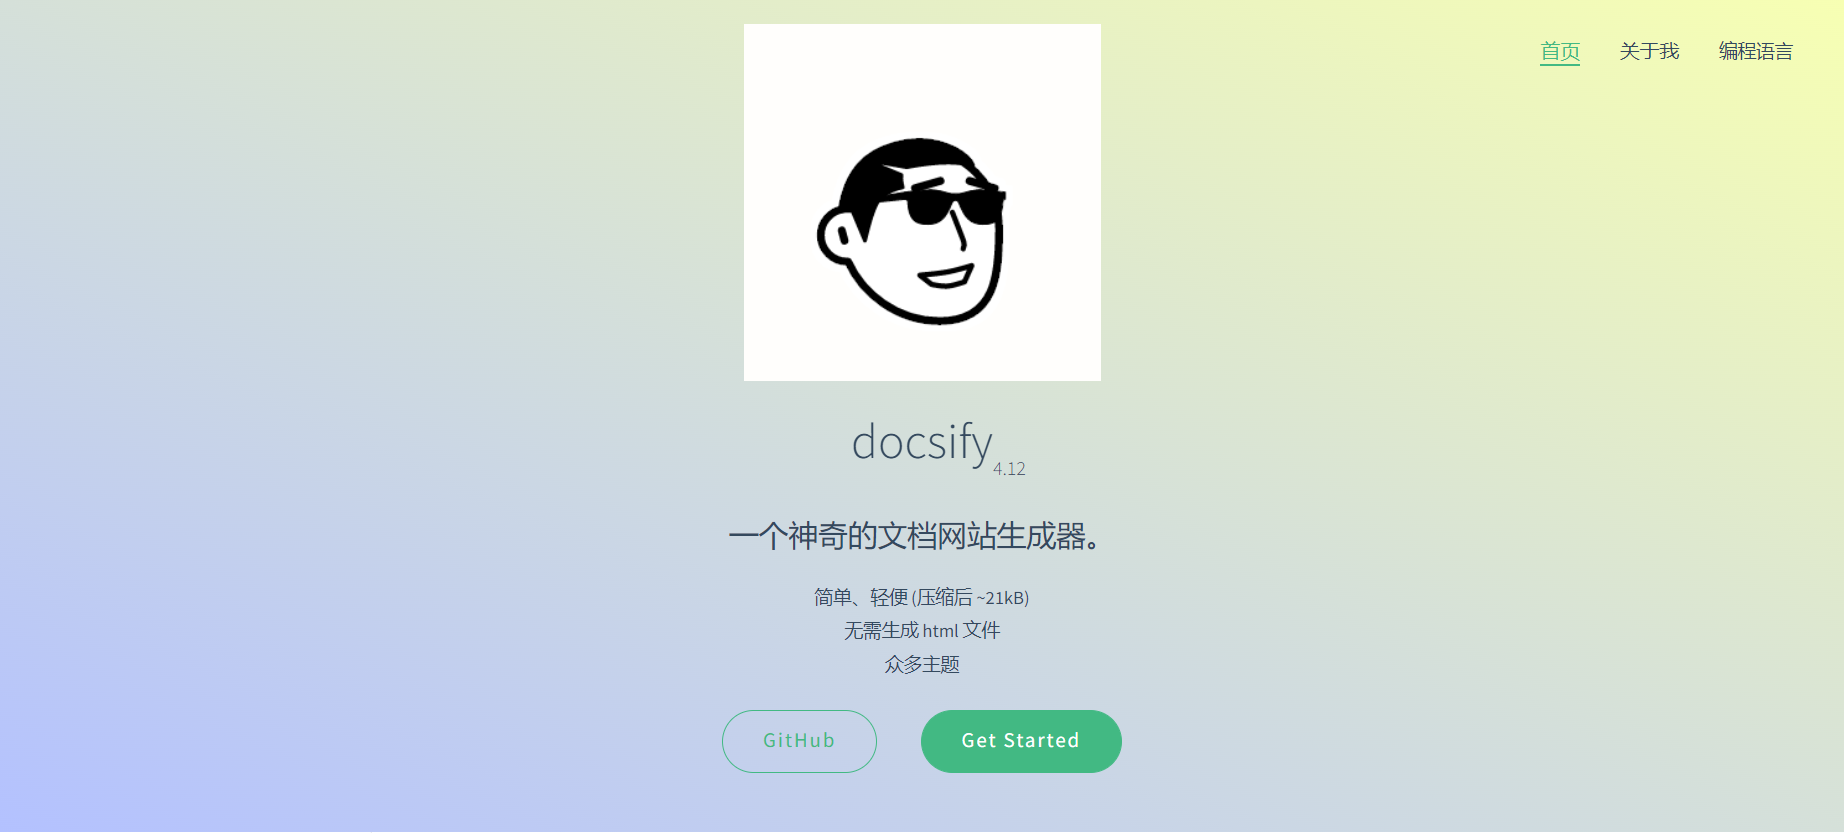 docsify_5_